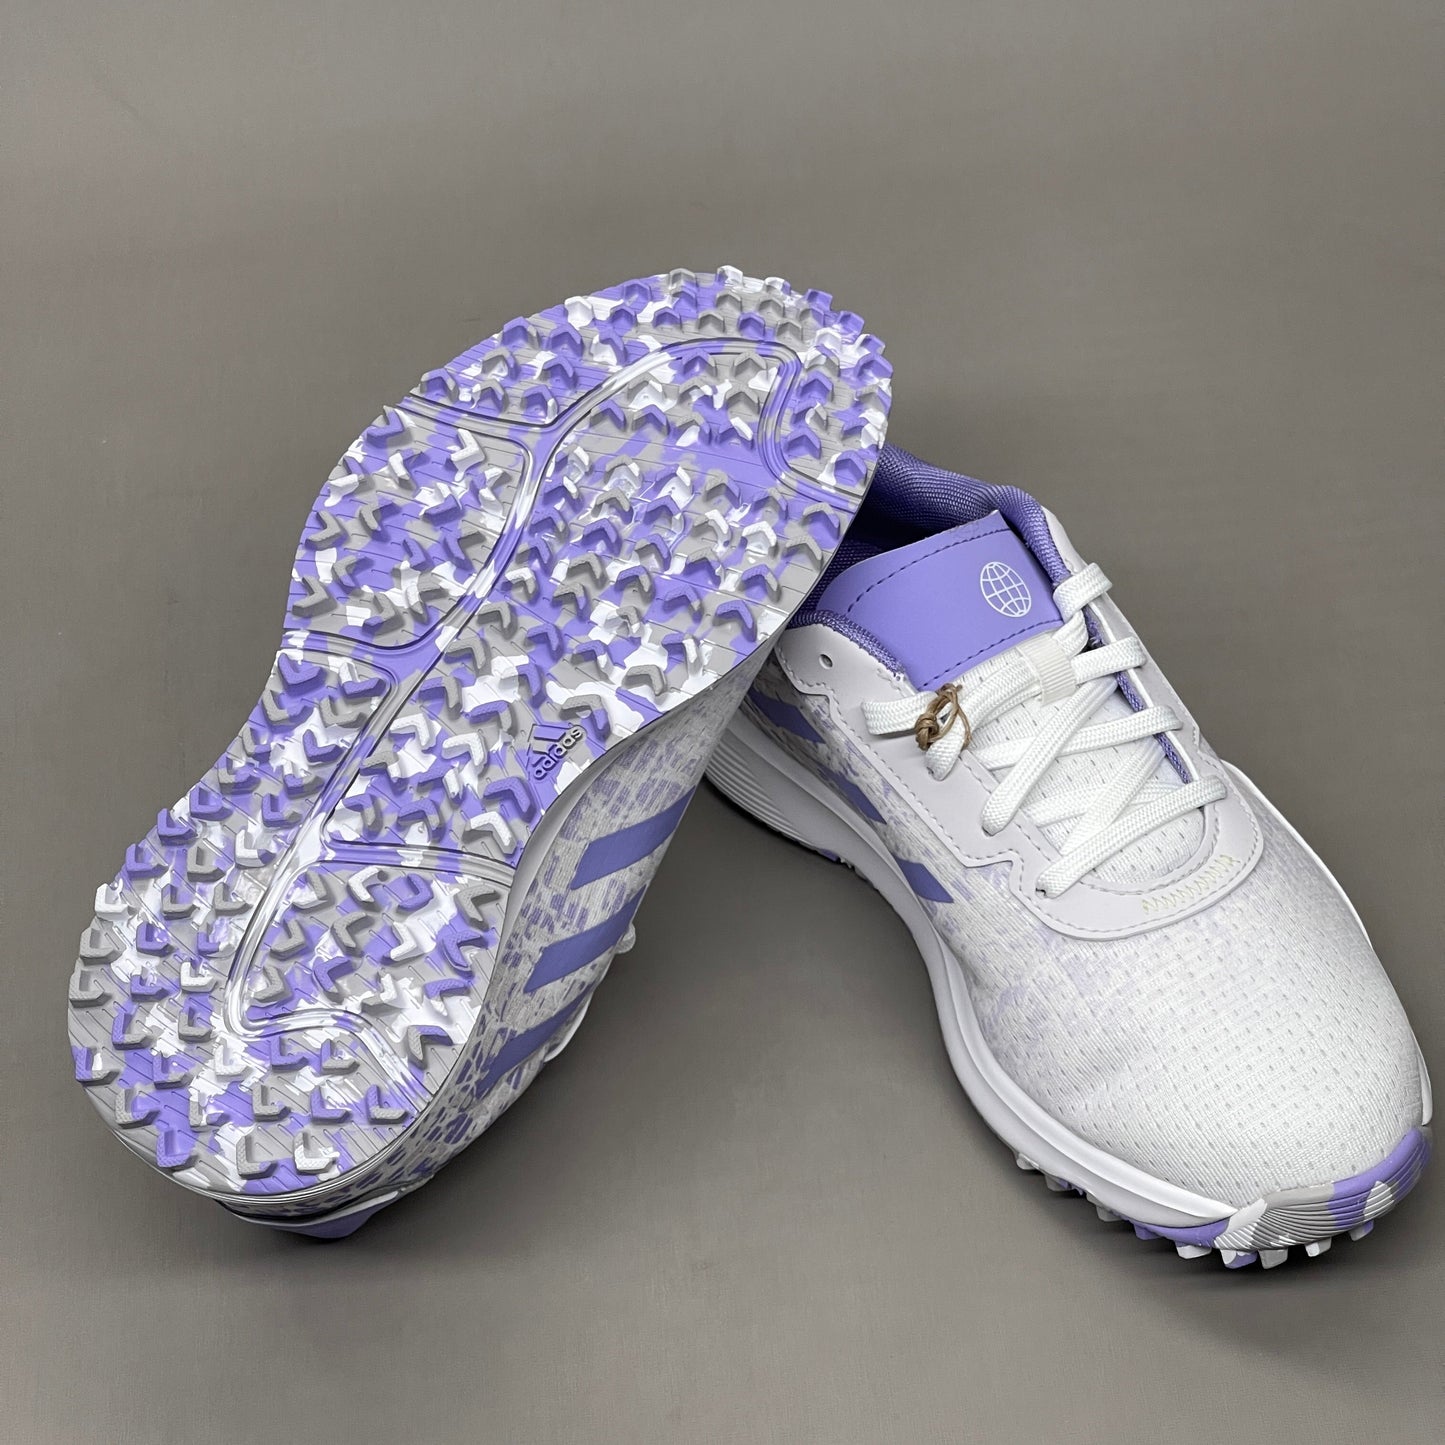 ADIDAS Golf Shoes JR S2G SL Waterproof Youth Sz 6.5 White / Lime / Purple GV9787 (New)